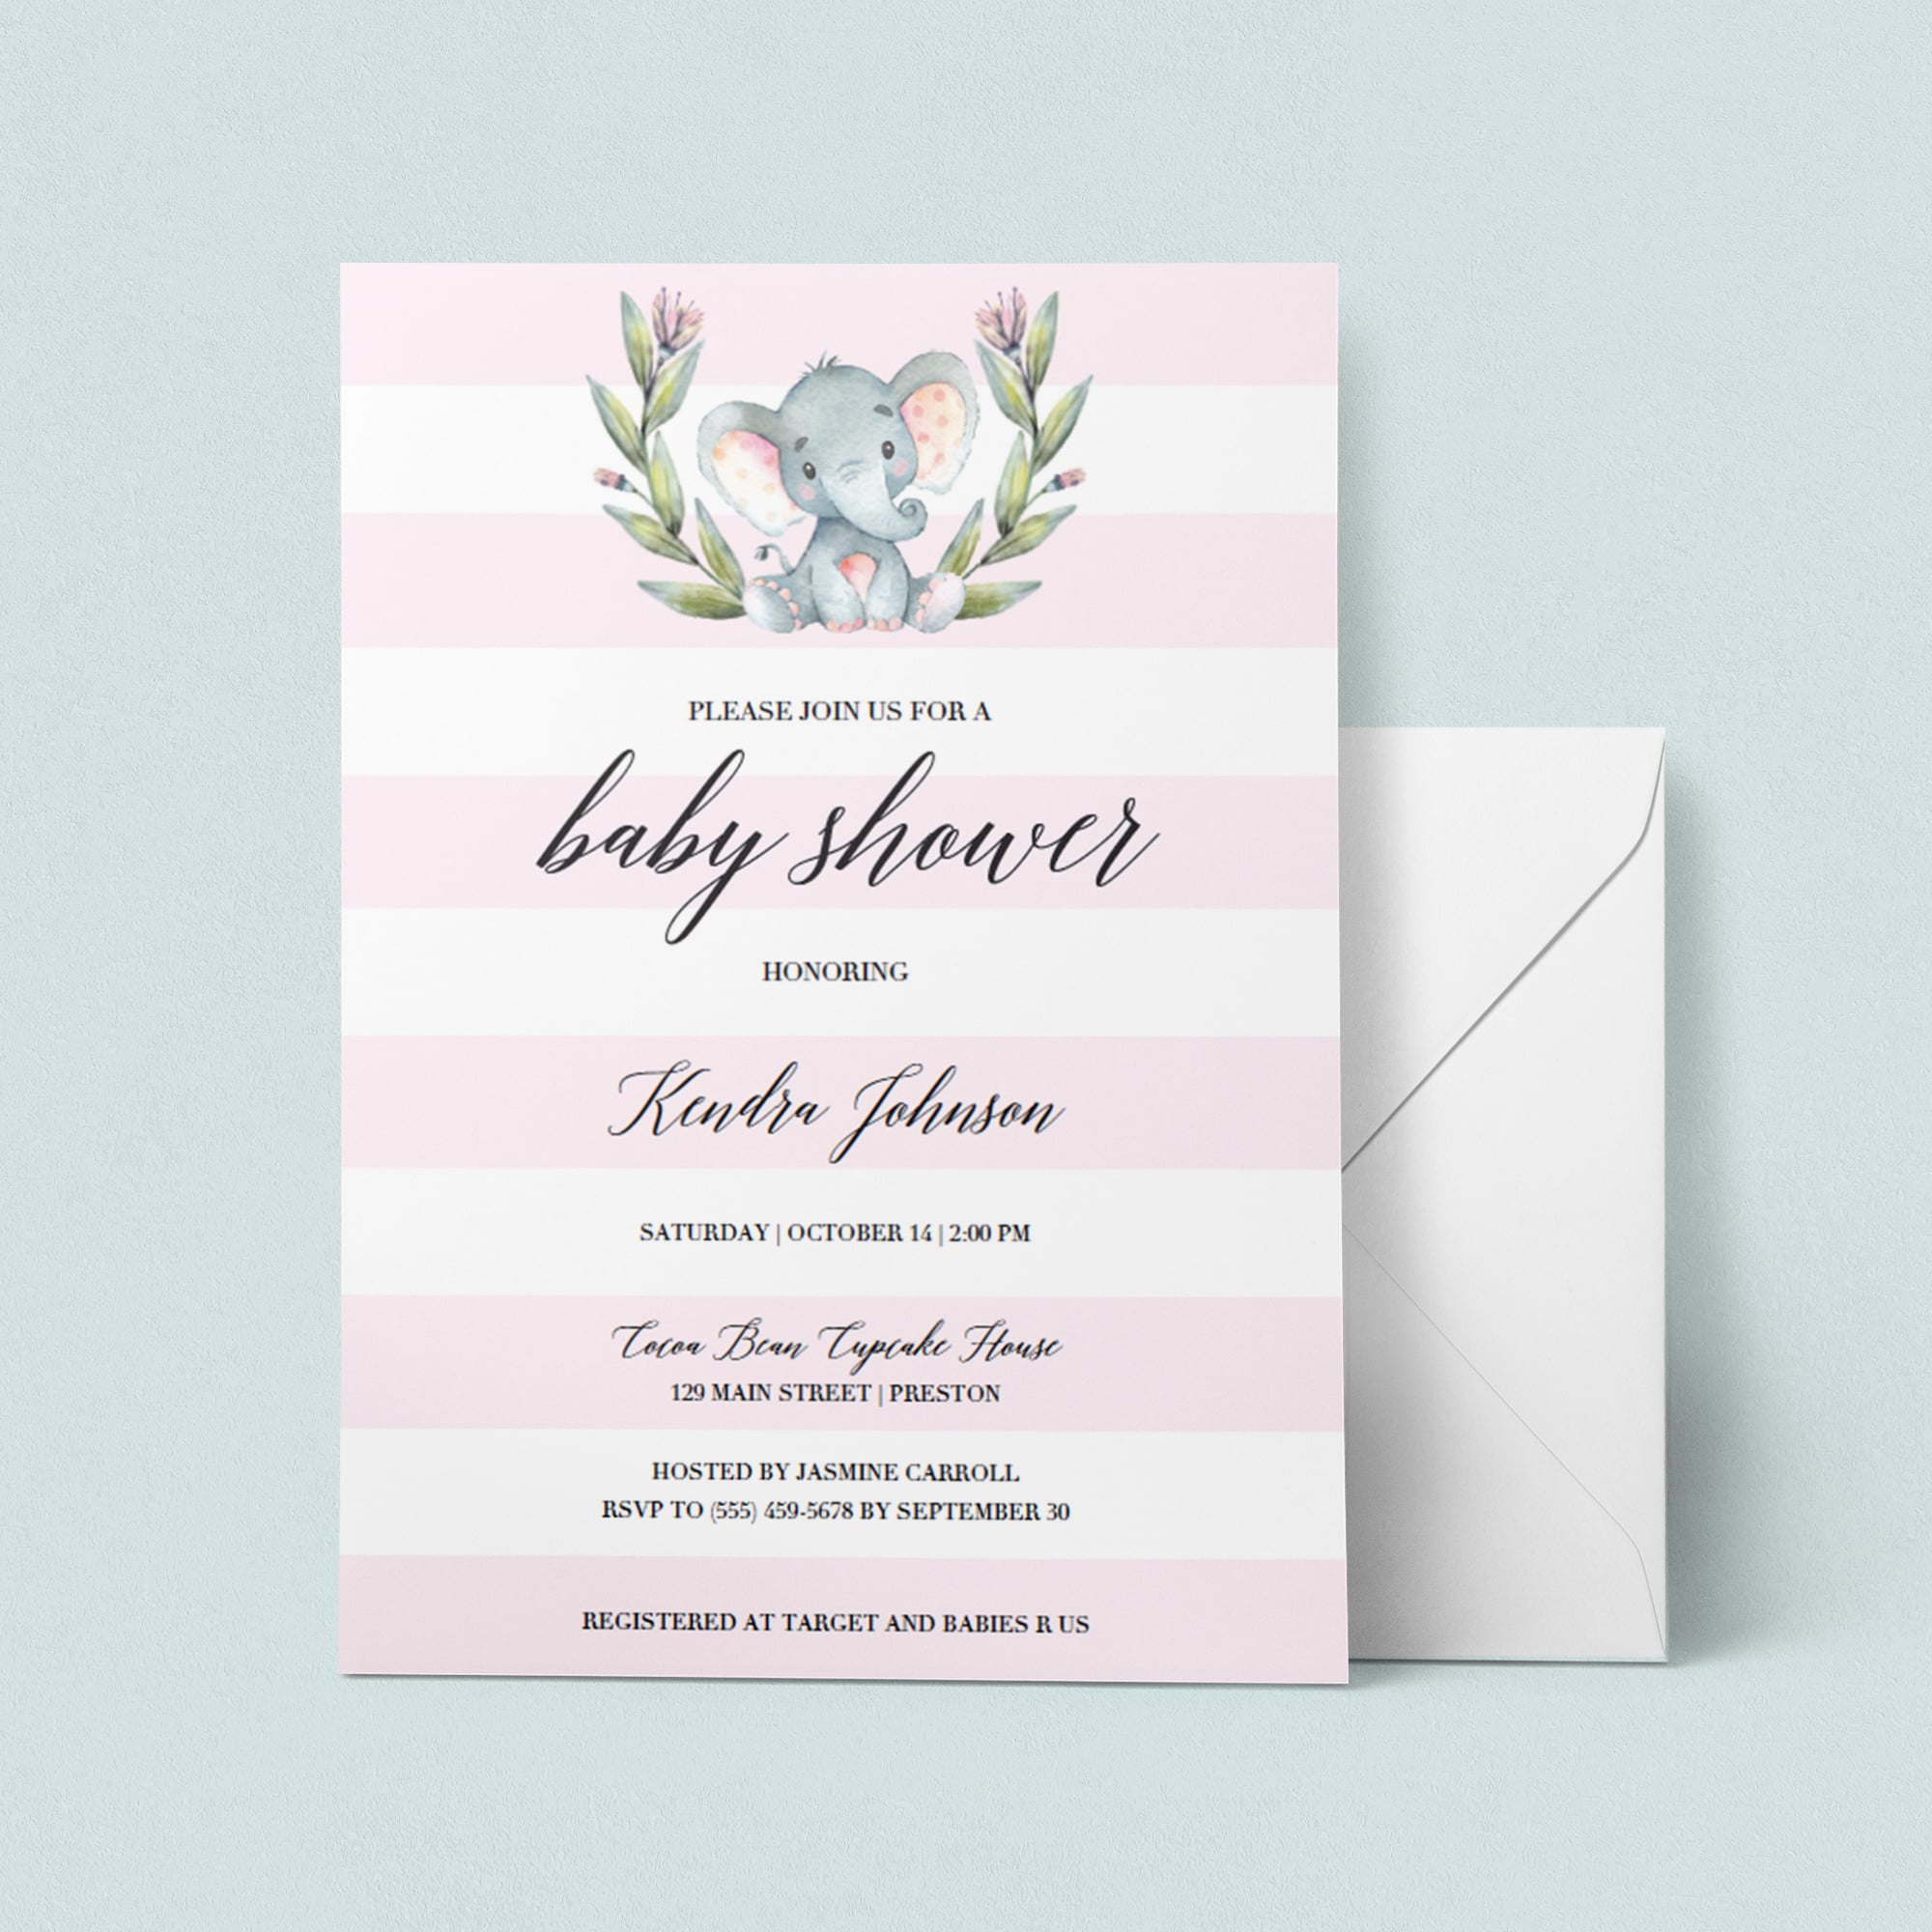 Elephant baby shower invitations by LittleSizzle